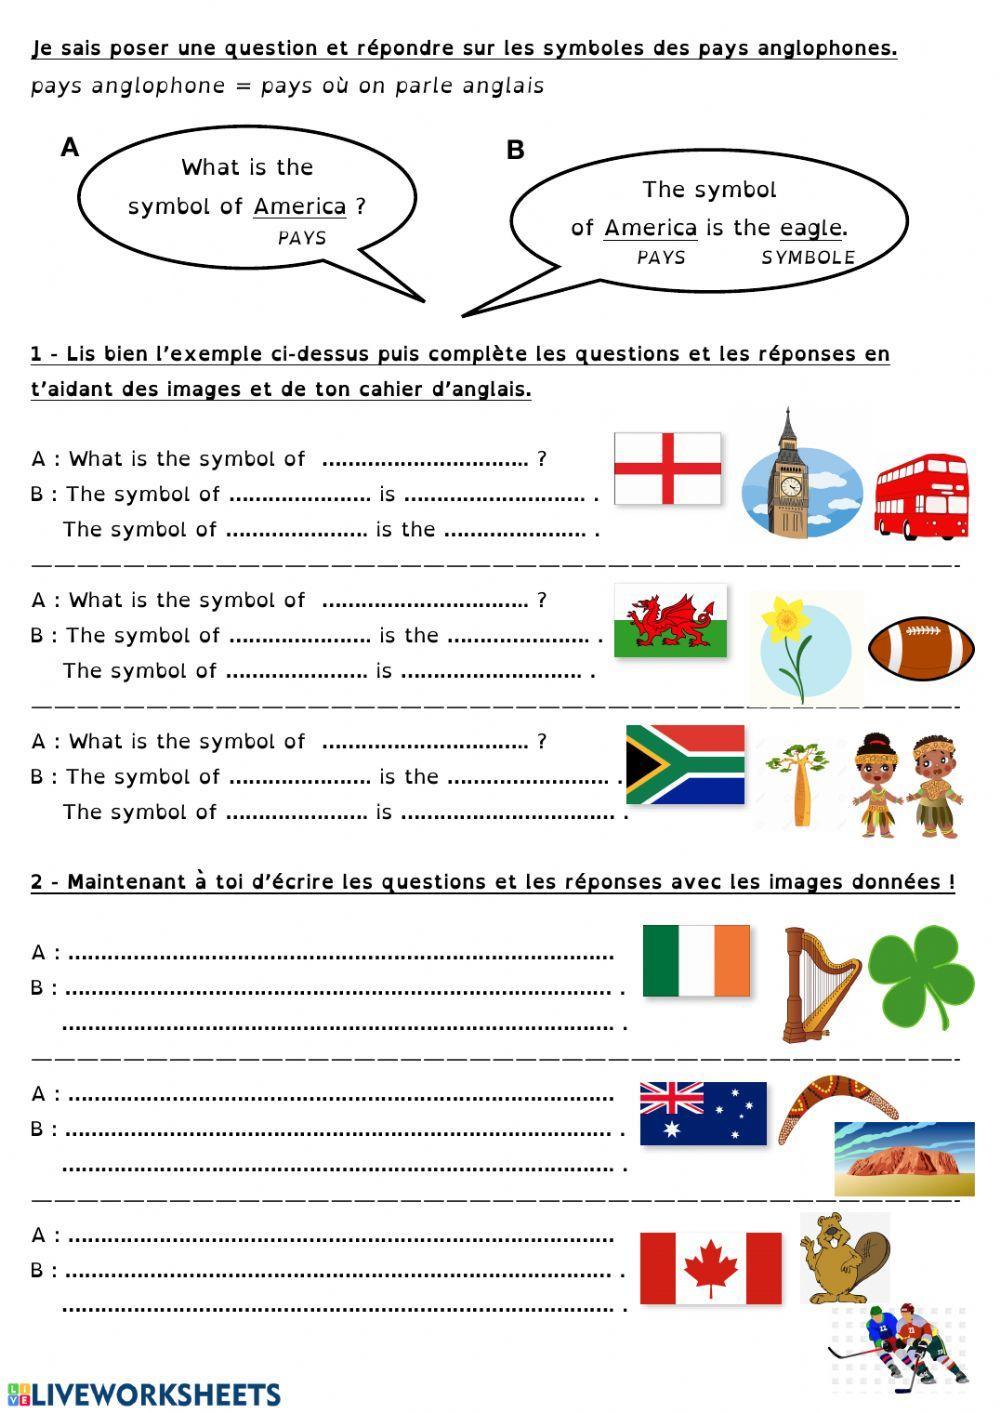 Symbols of english-speaking countries